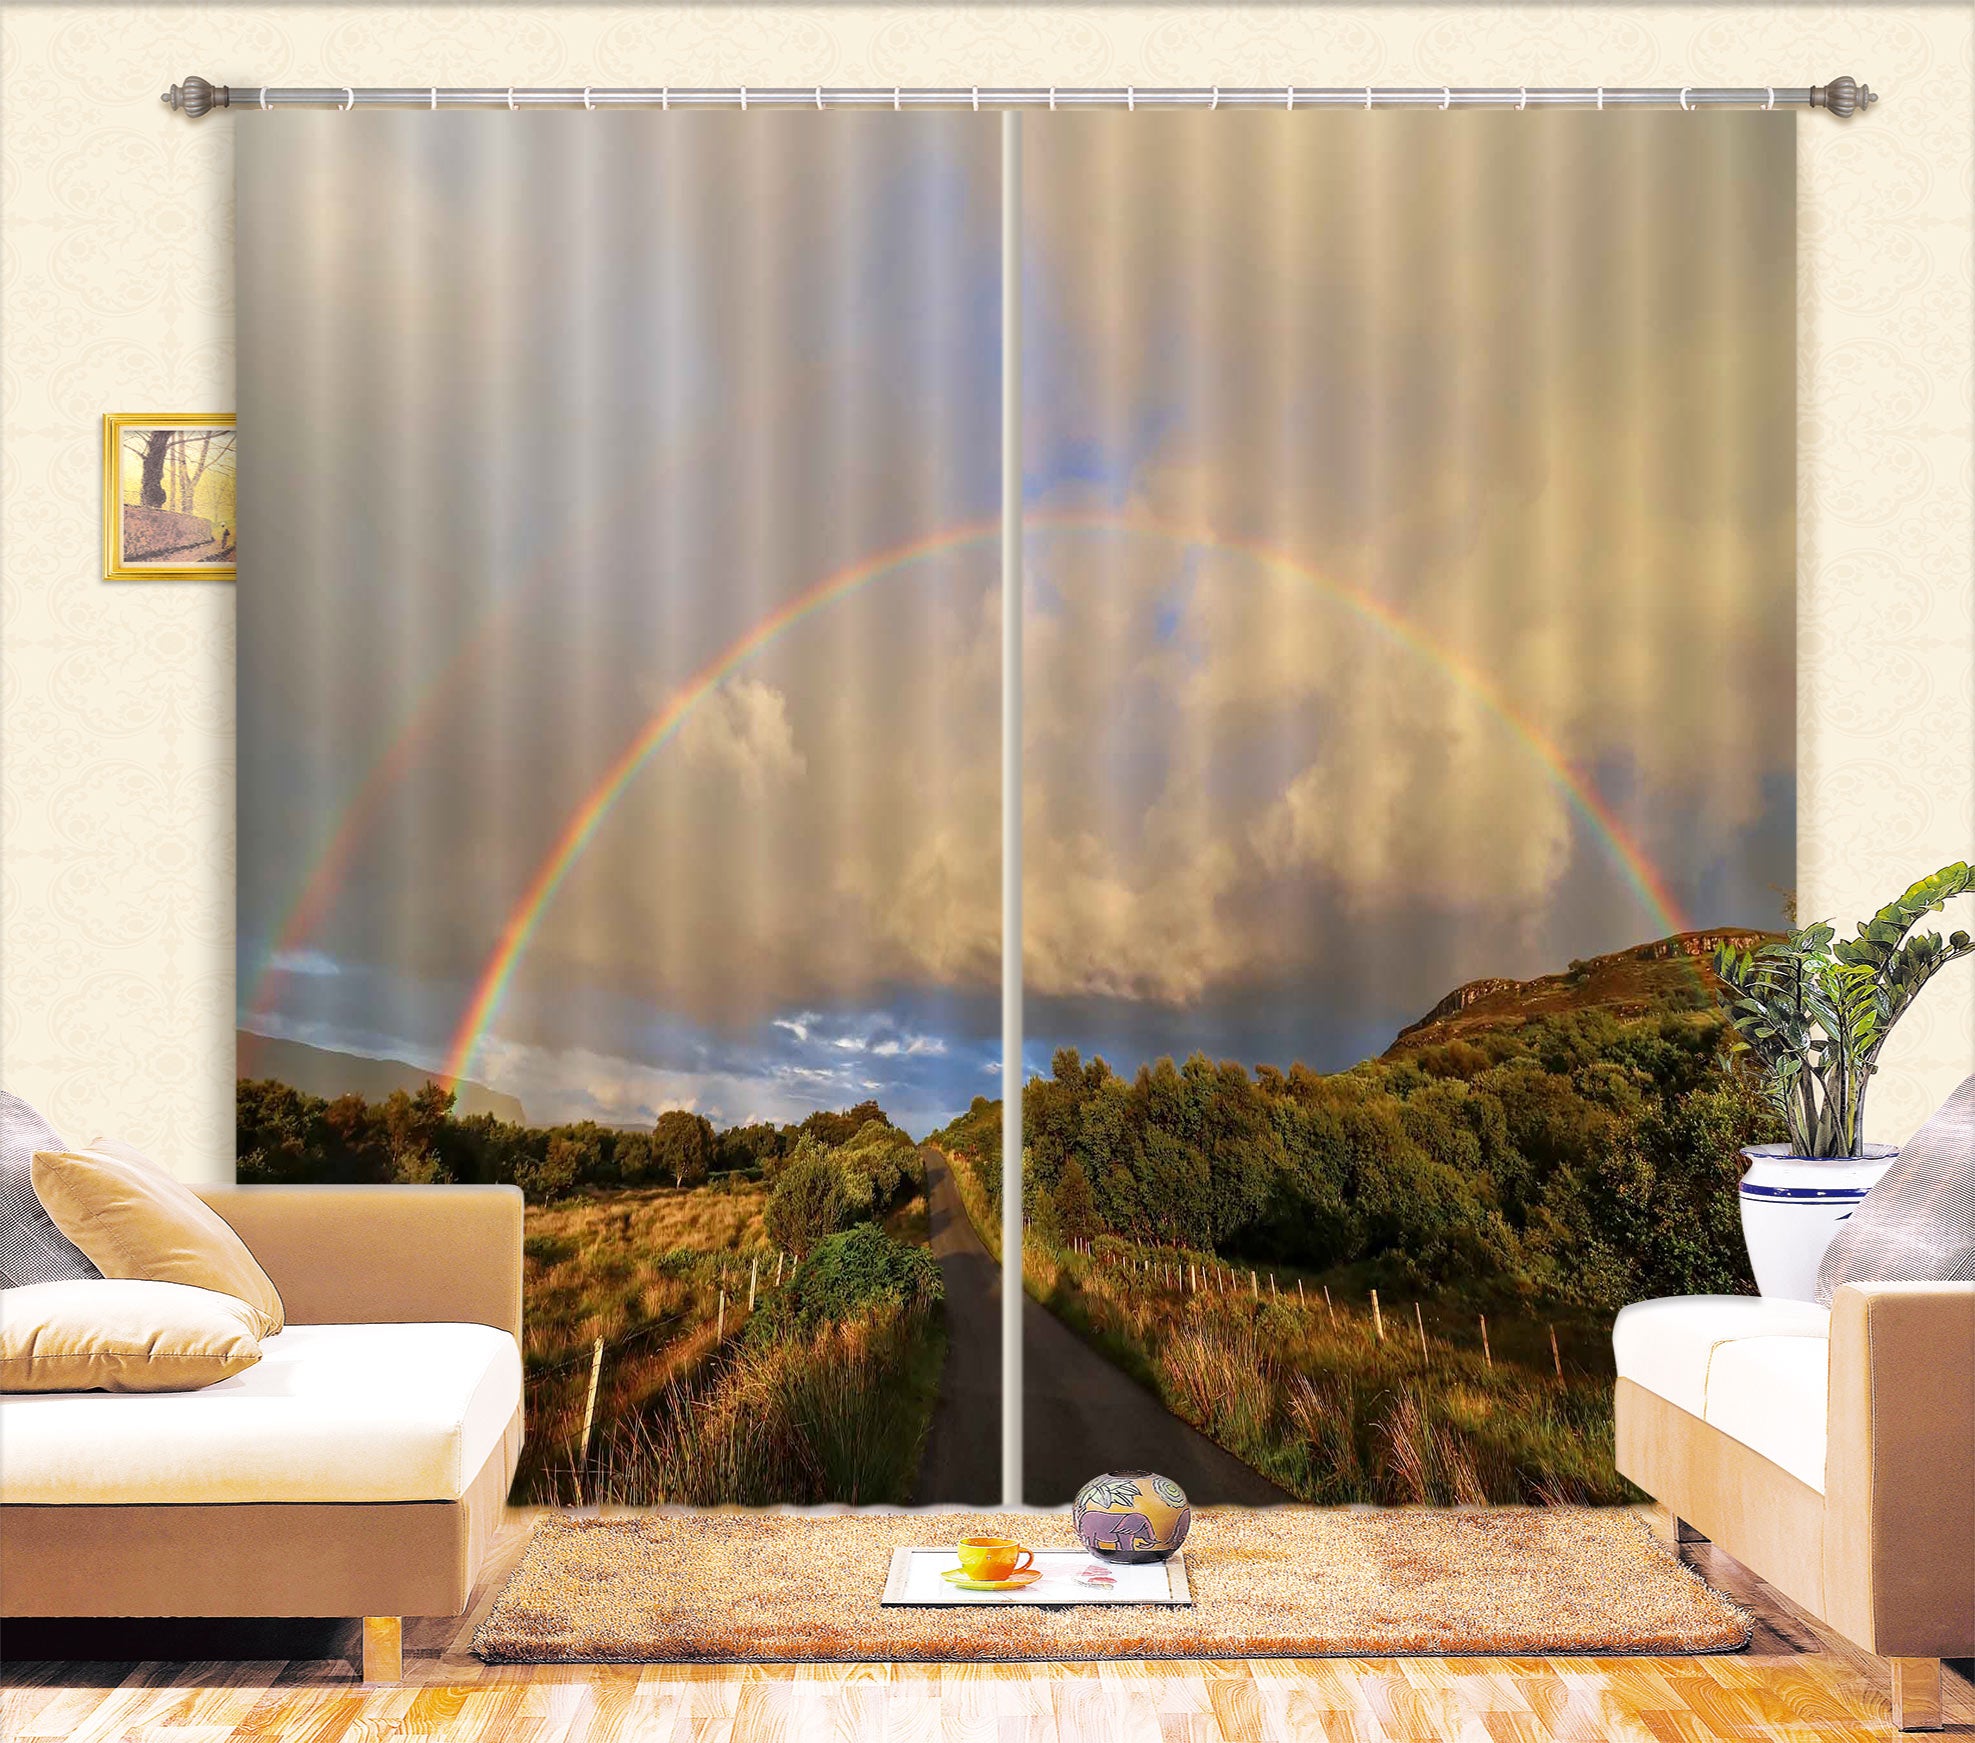 3D Scottish Rainbow 020 Jerry LoFaro Curtain Curtains Drapes